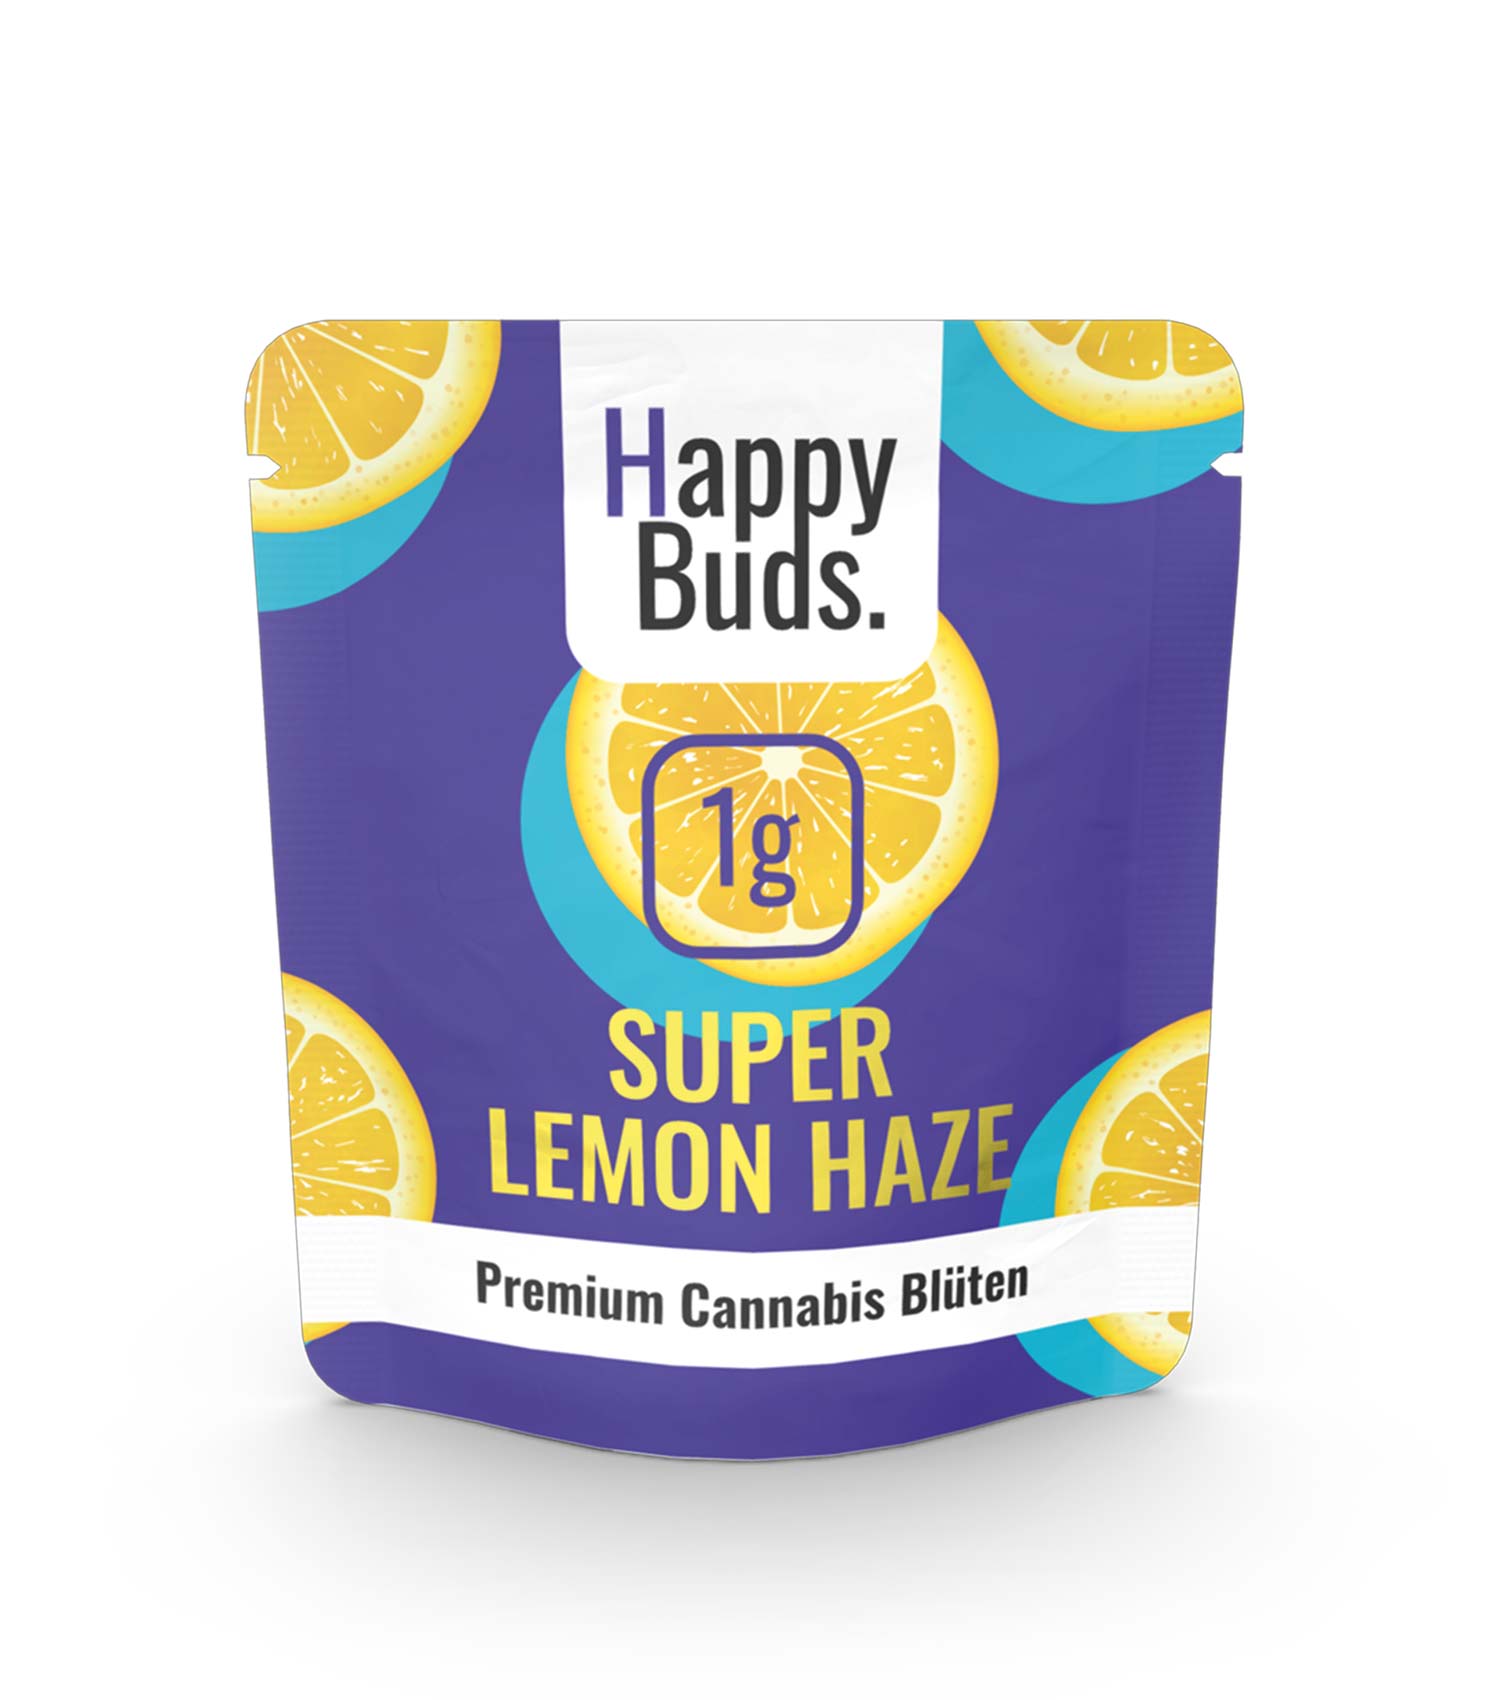 Super Lemon Haze 1g